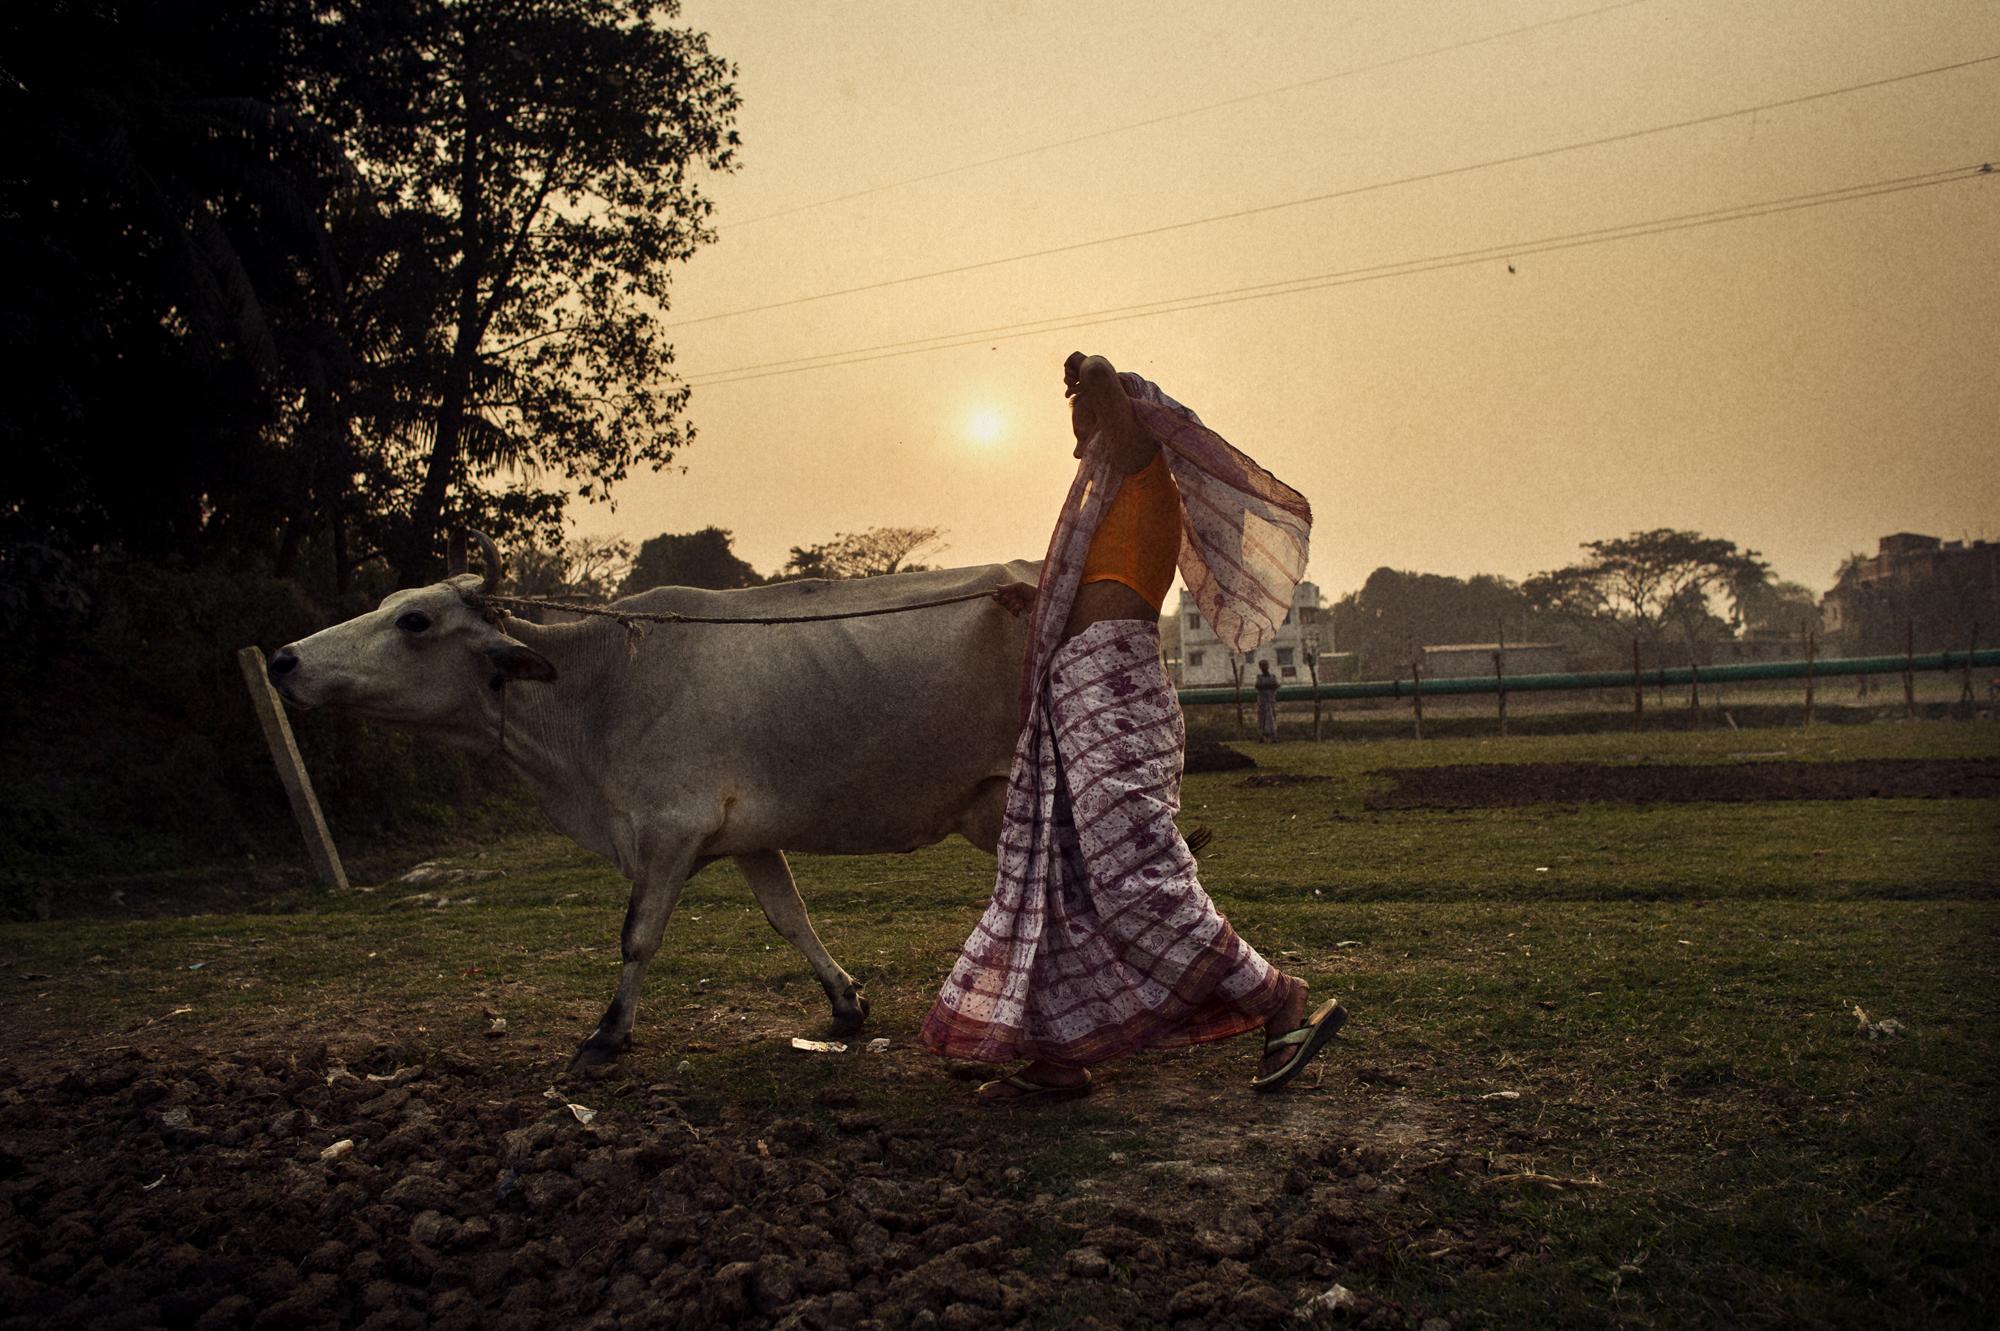 Microcredit / Bangladesh - Bangladesh, Dhaka, Kalindi.
January 2012
Bulu Begum is...